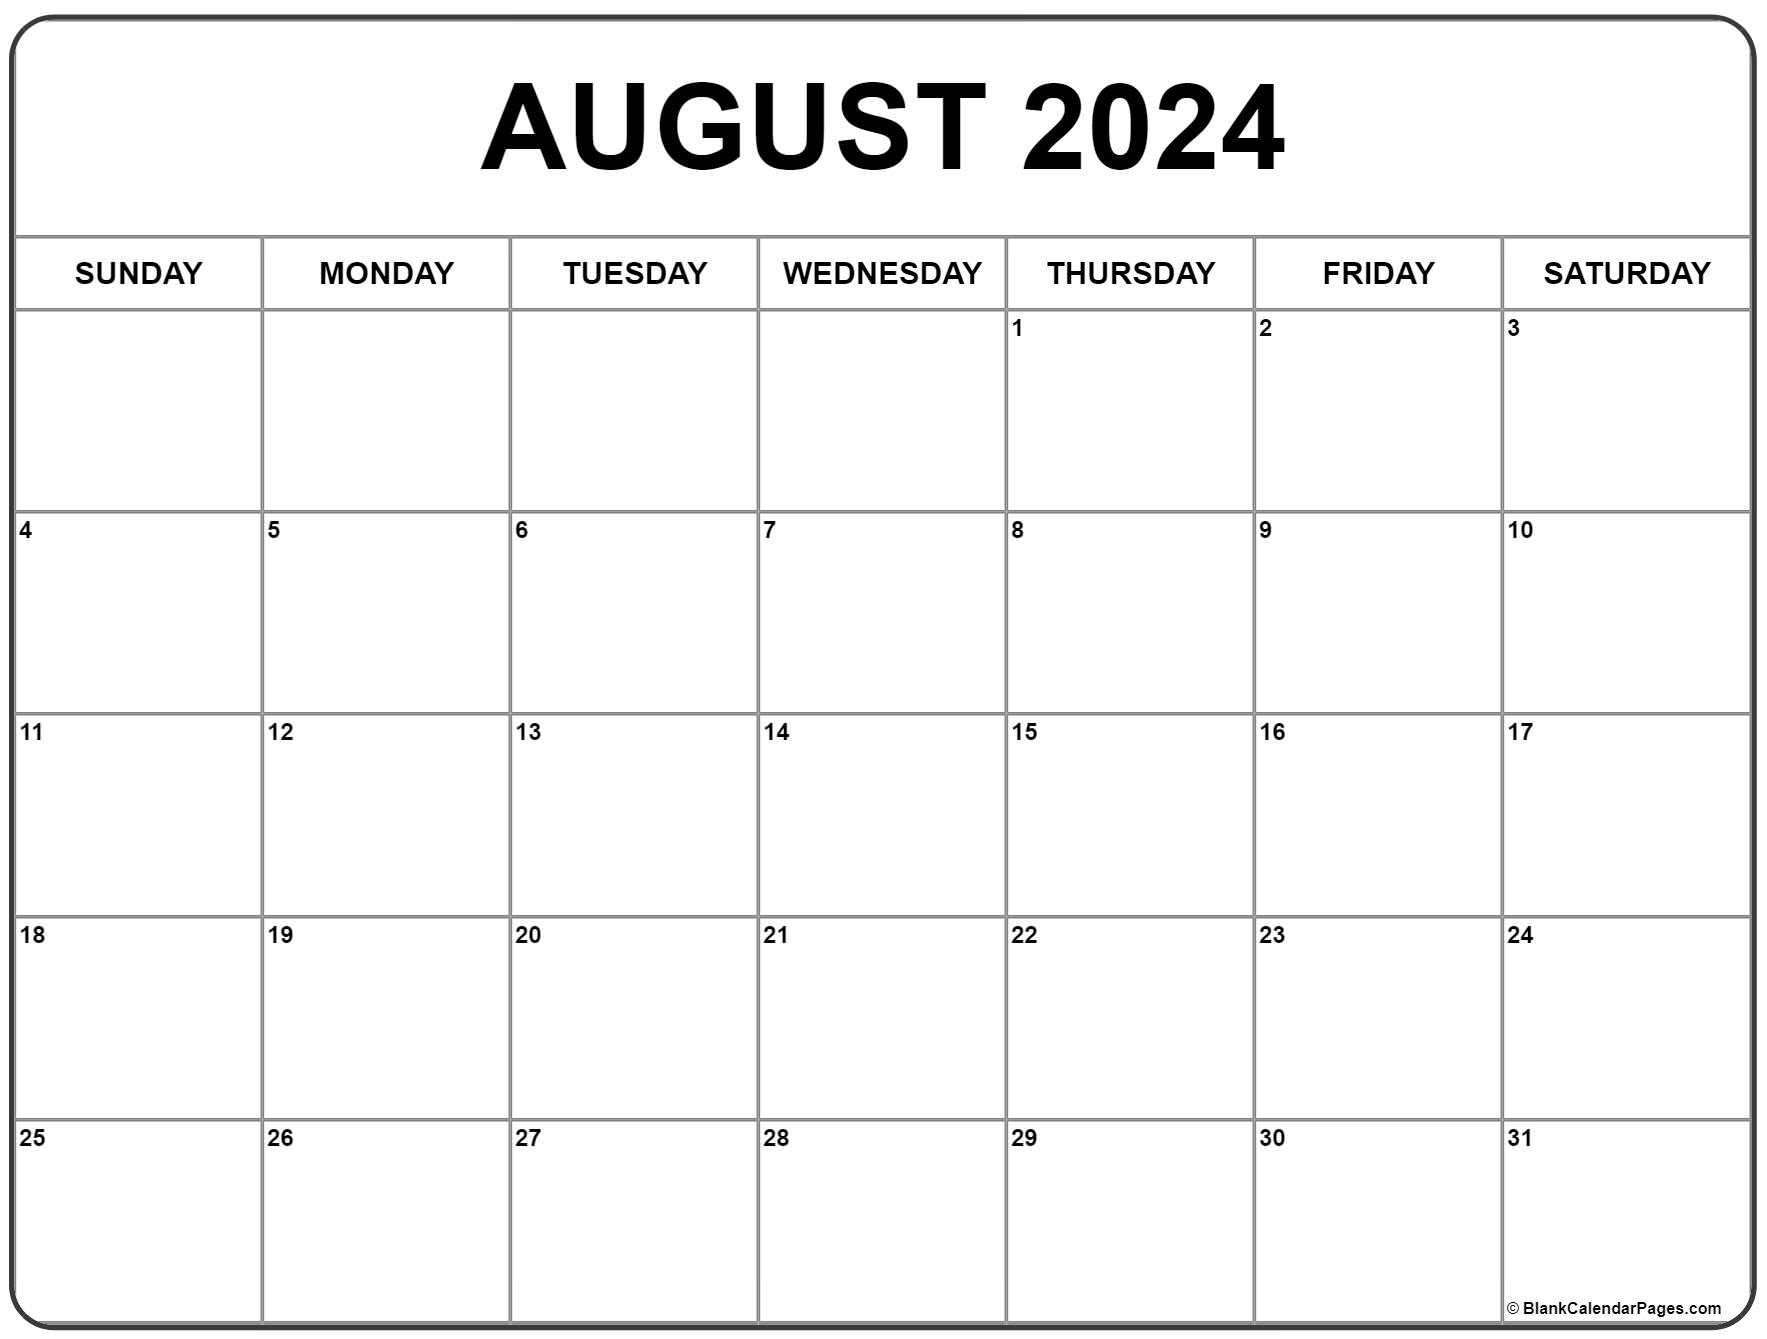 August 2024 Calendar | Free Printable Calendar for Calendar 2024 August Printable